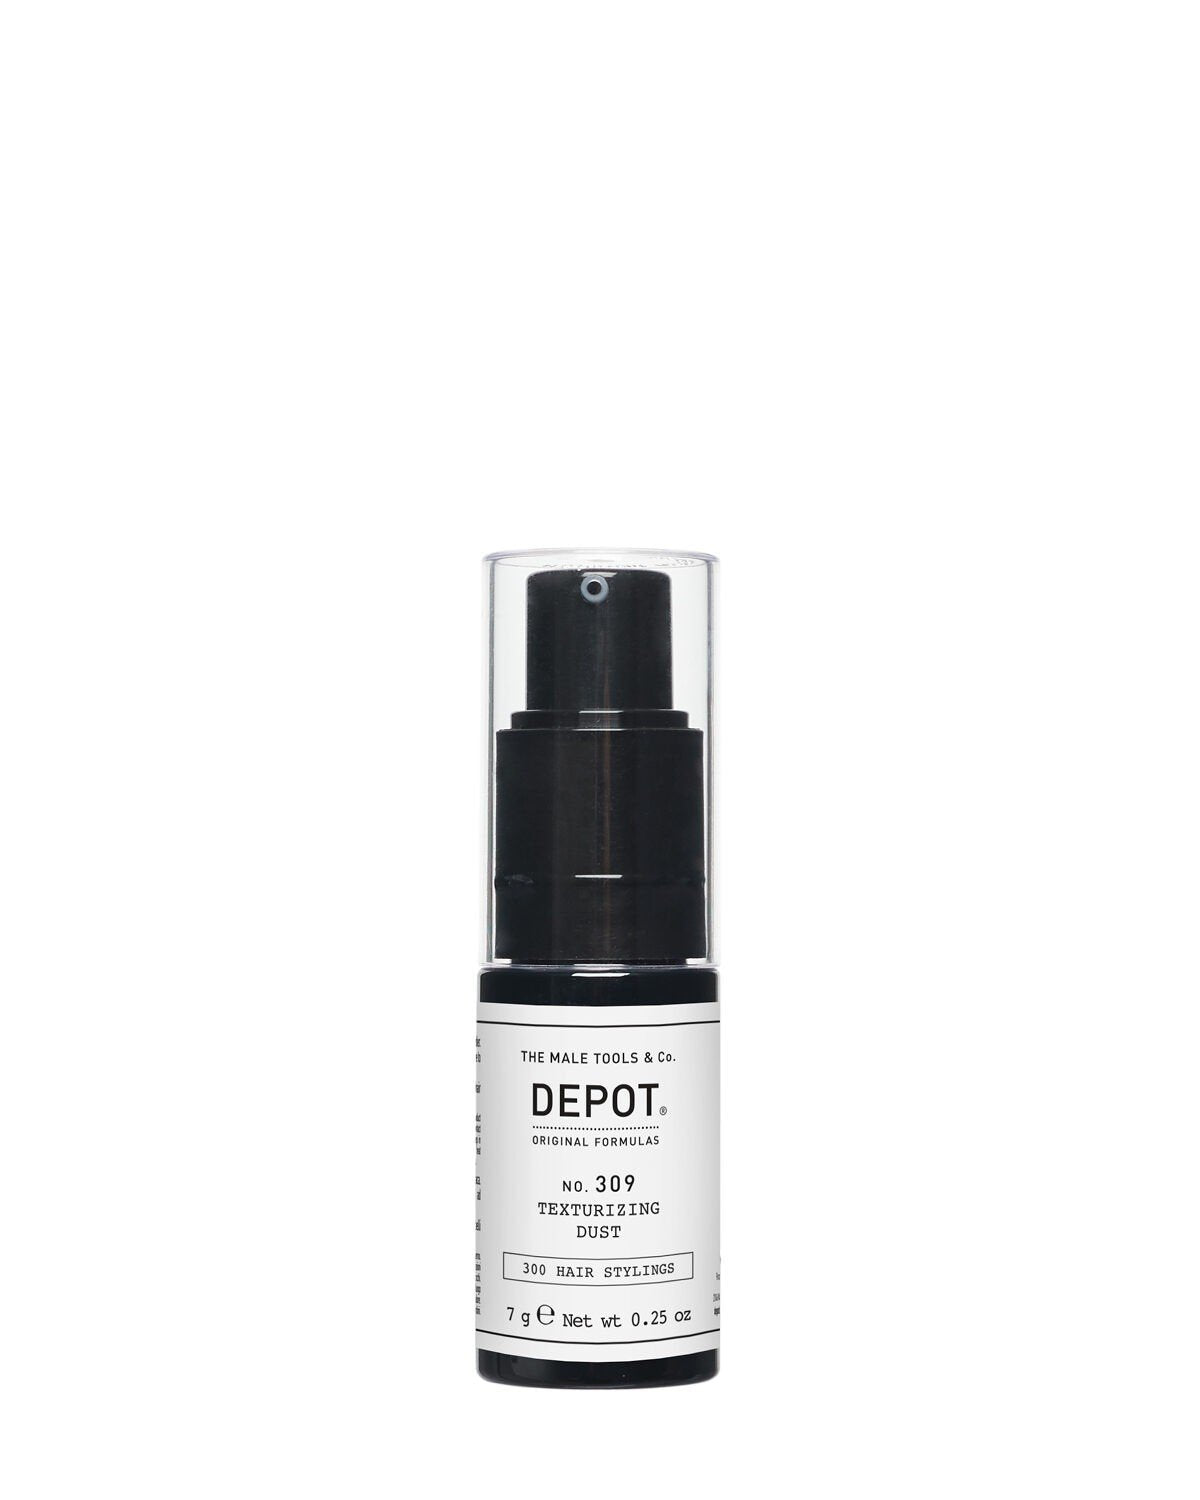 DEPOT 309 Texturizing Dust